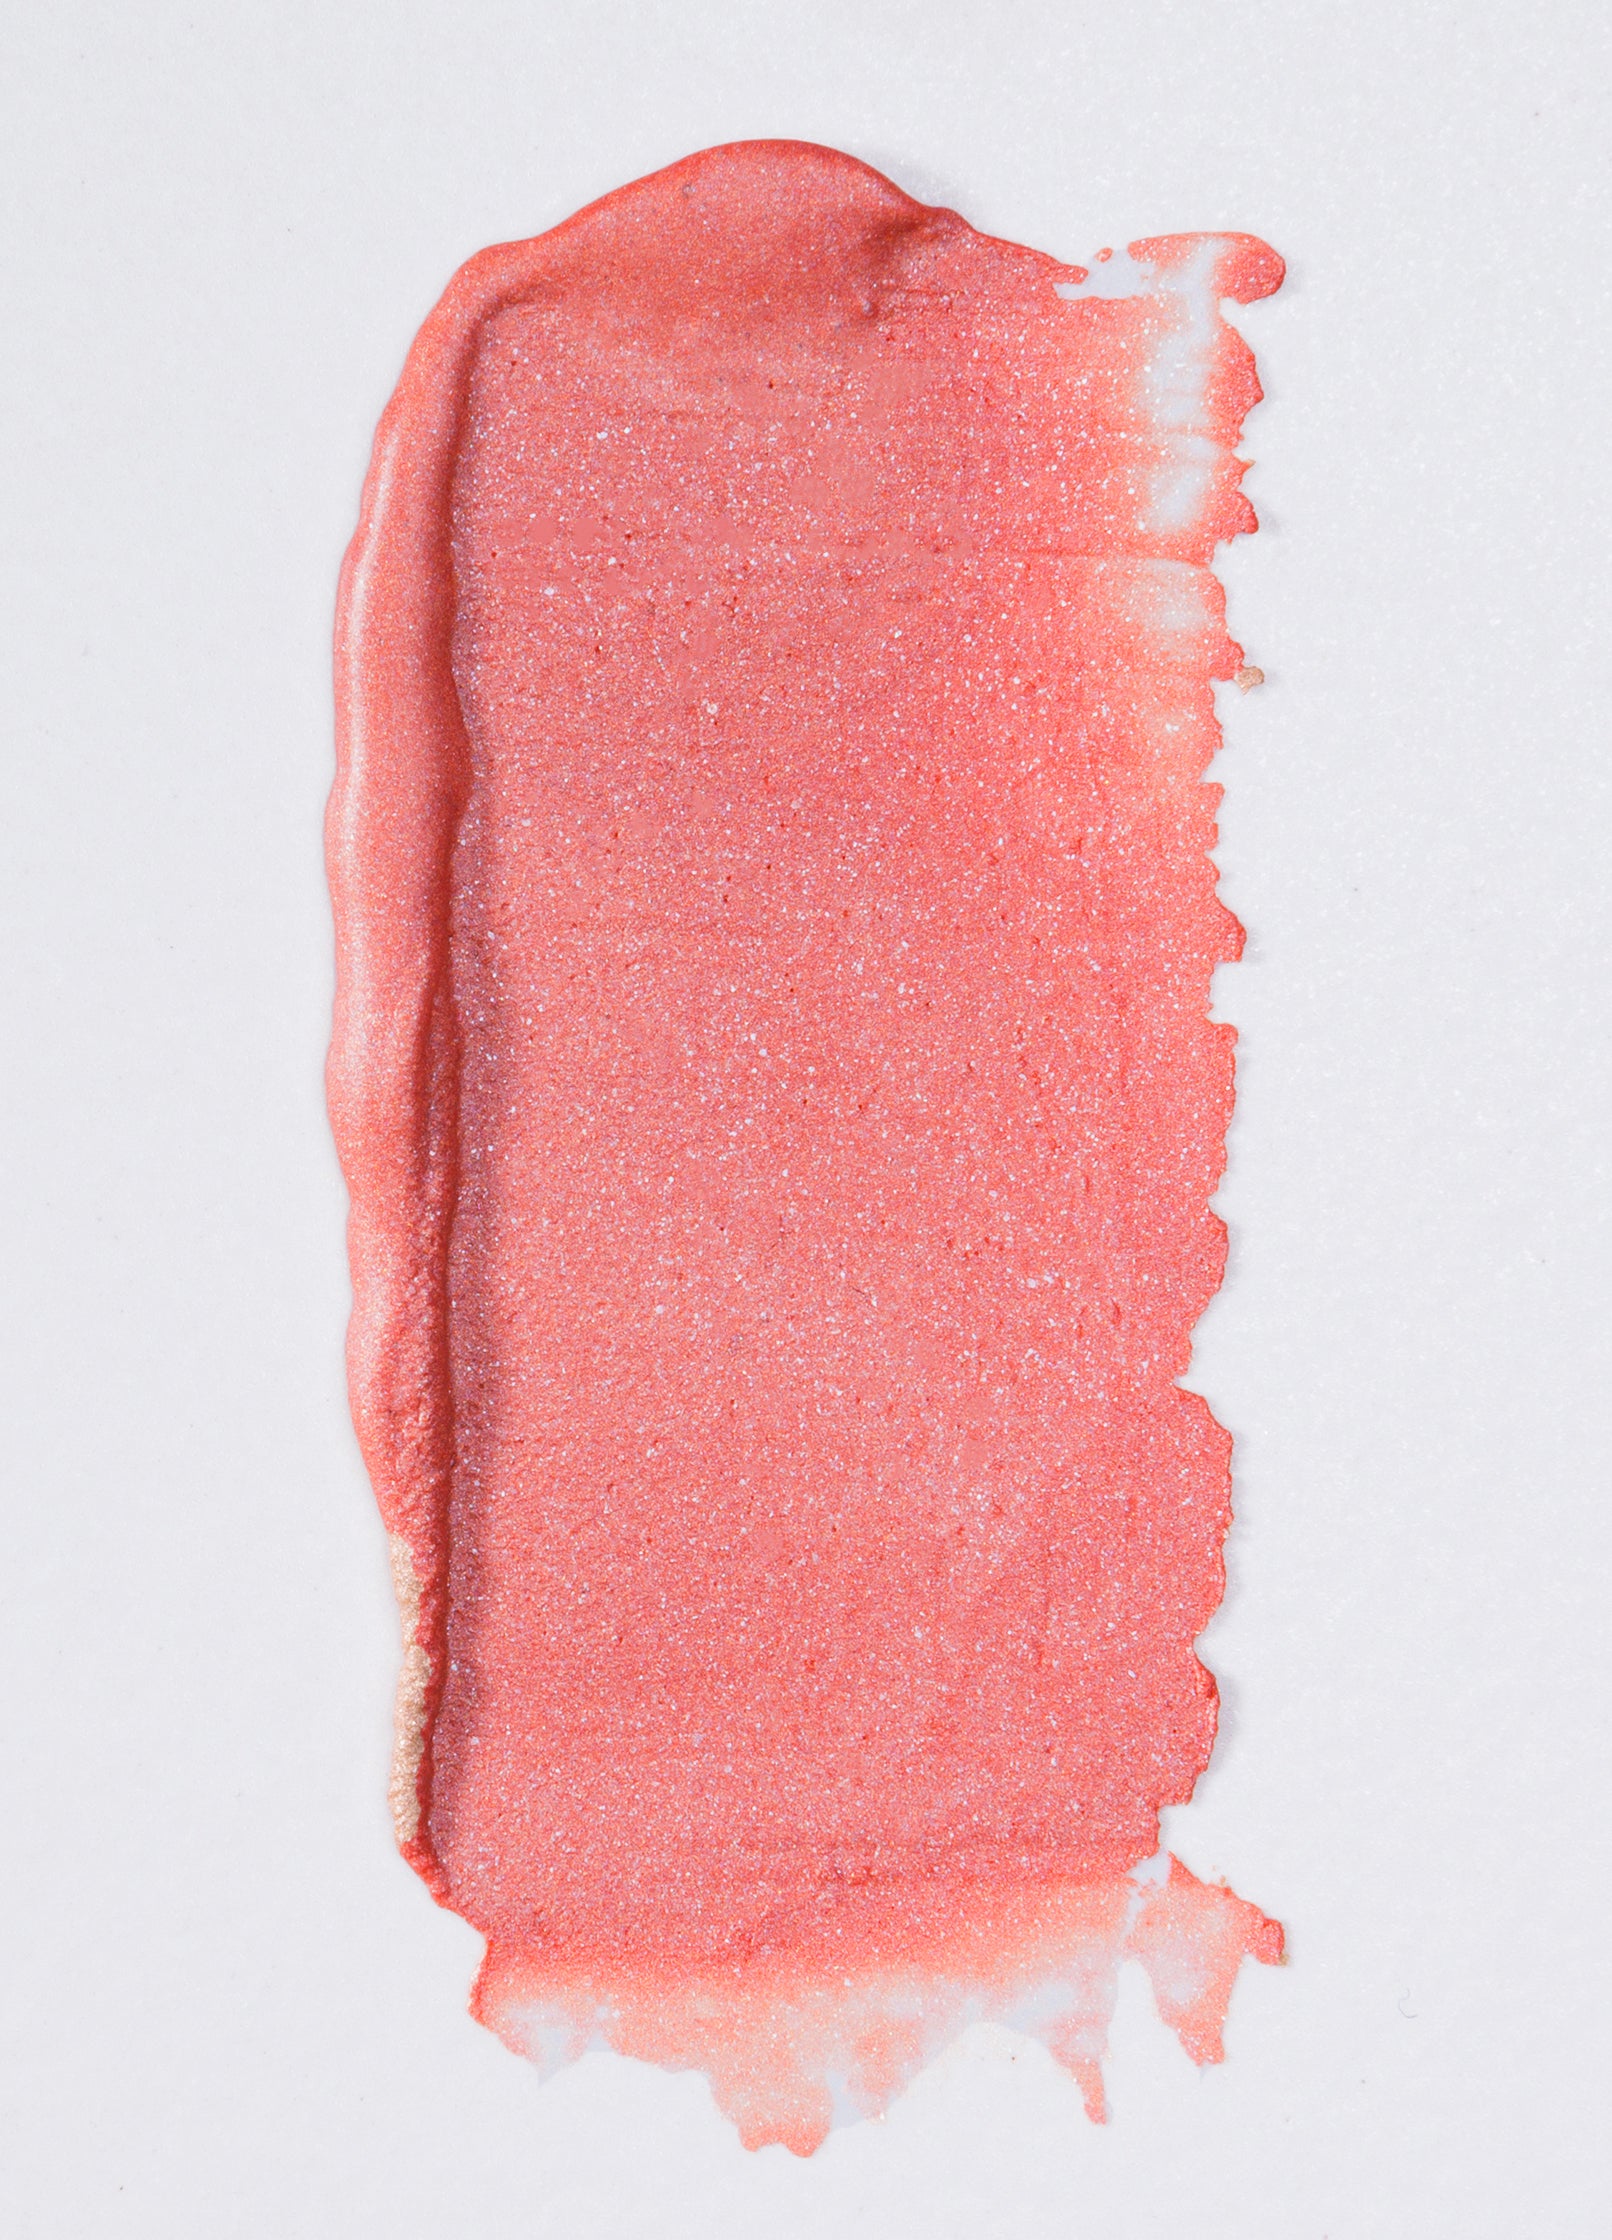 creme blush, cream blush vegan cruelty free refillable makeup #shade_Pinch_|_Iridescent_Coral_Pink